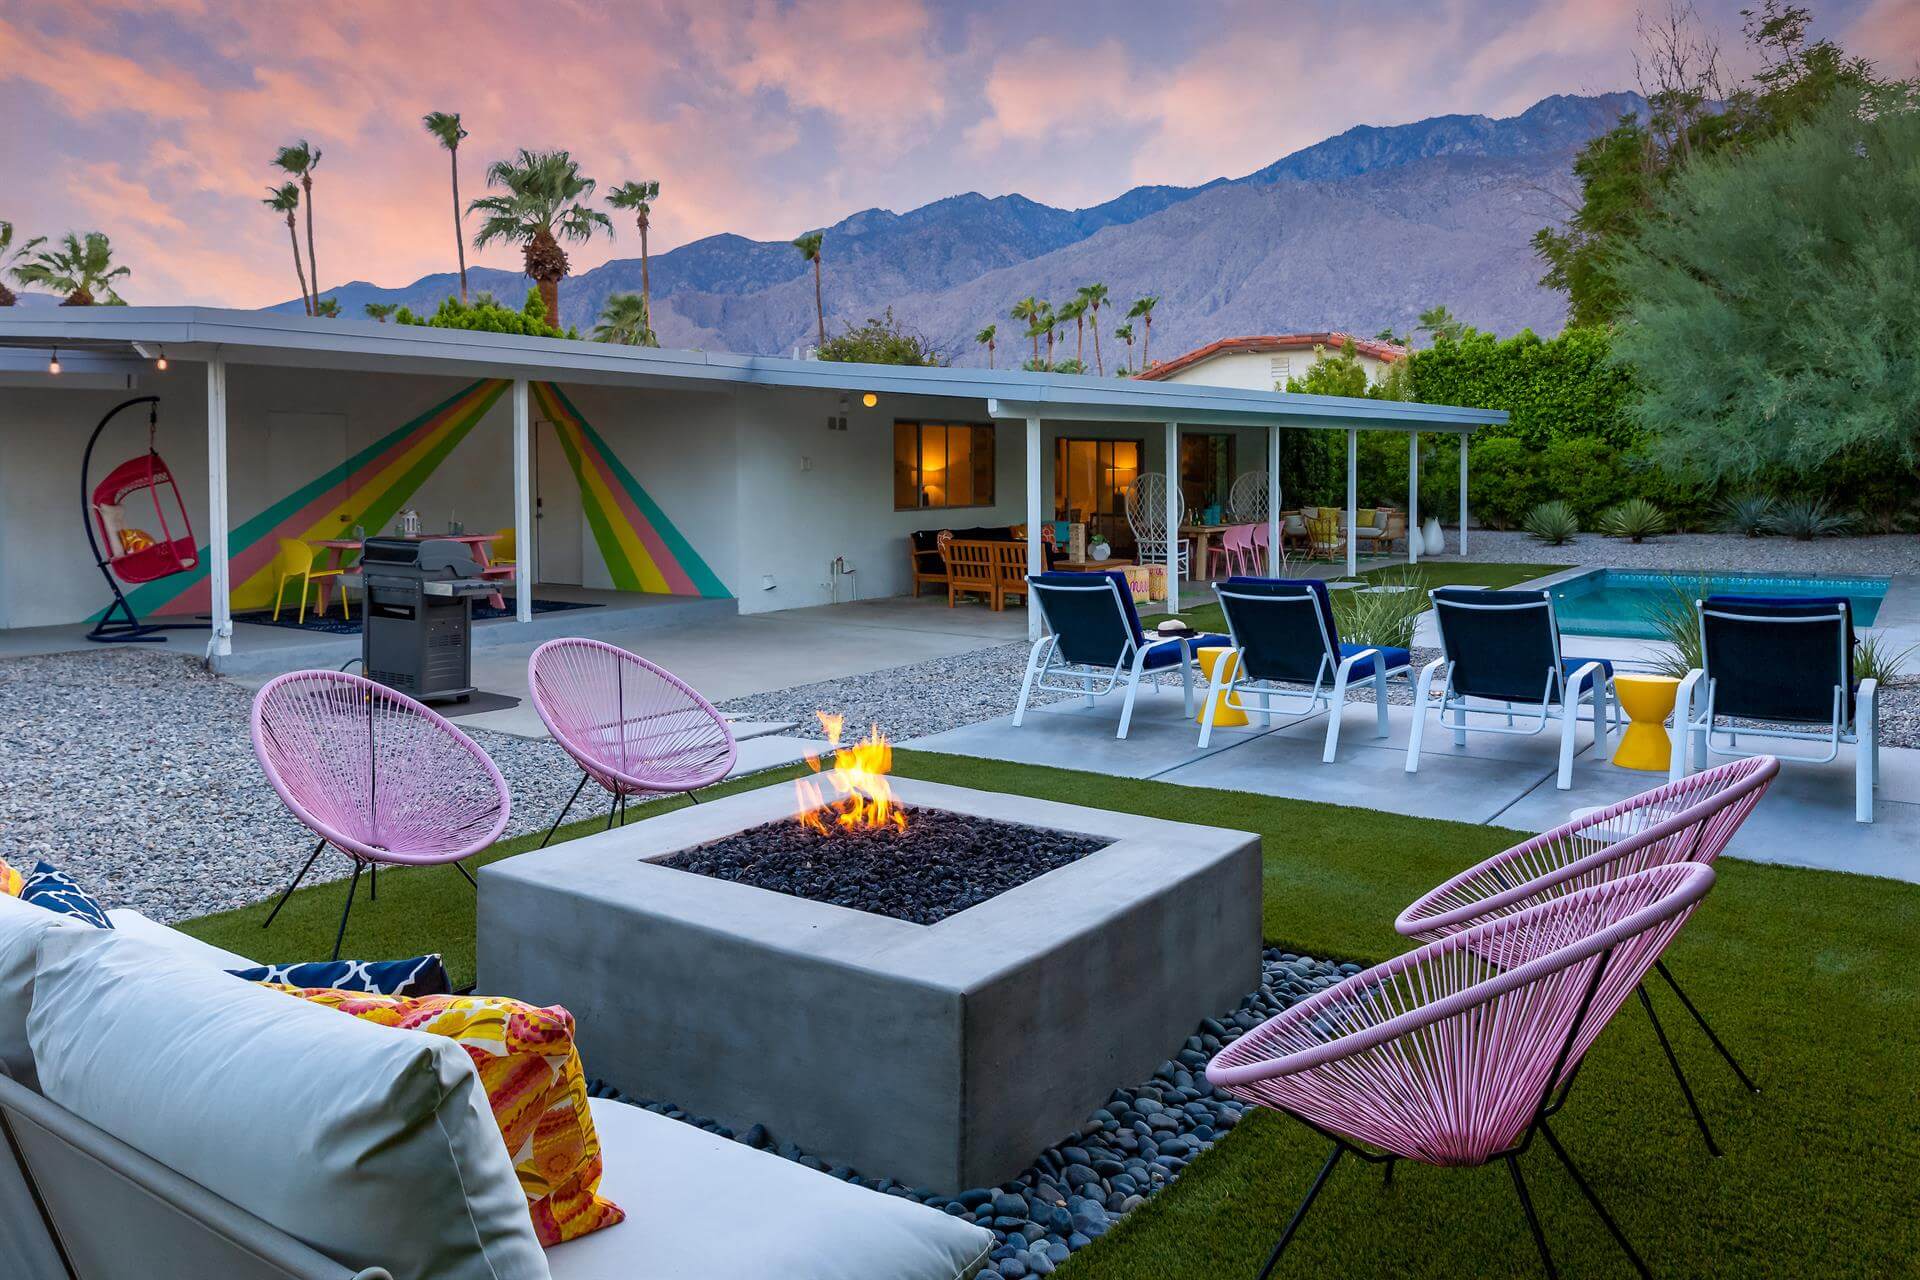 Aesthetic Palm Springs Backyard at Sunset